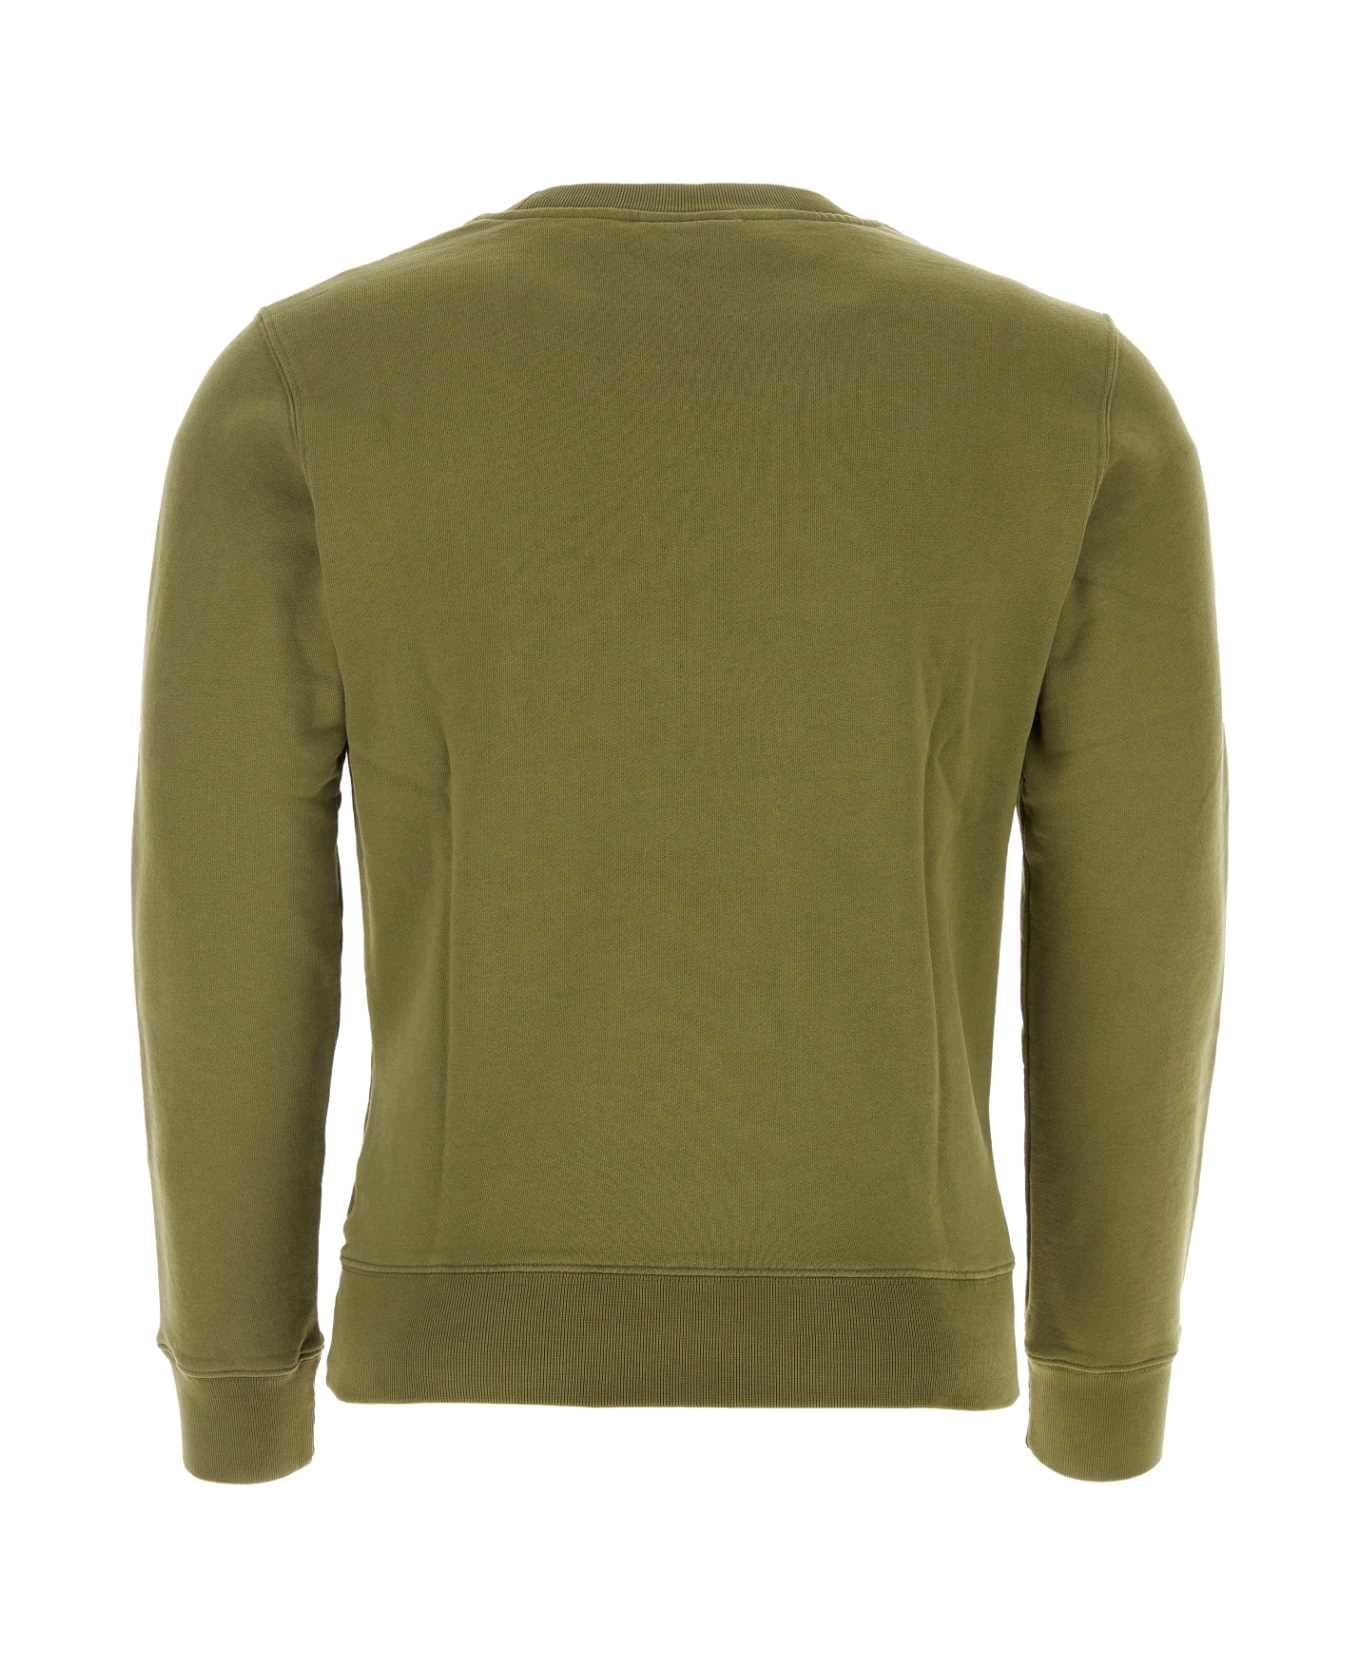 Maison Kitsuné Army Green Cotton Sweatshirt - MILITARYGREEN